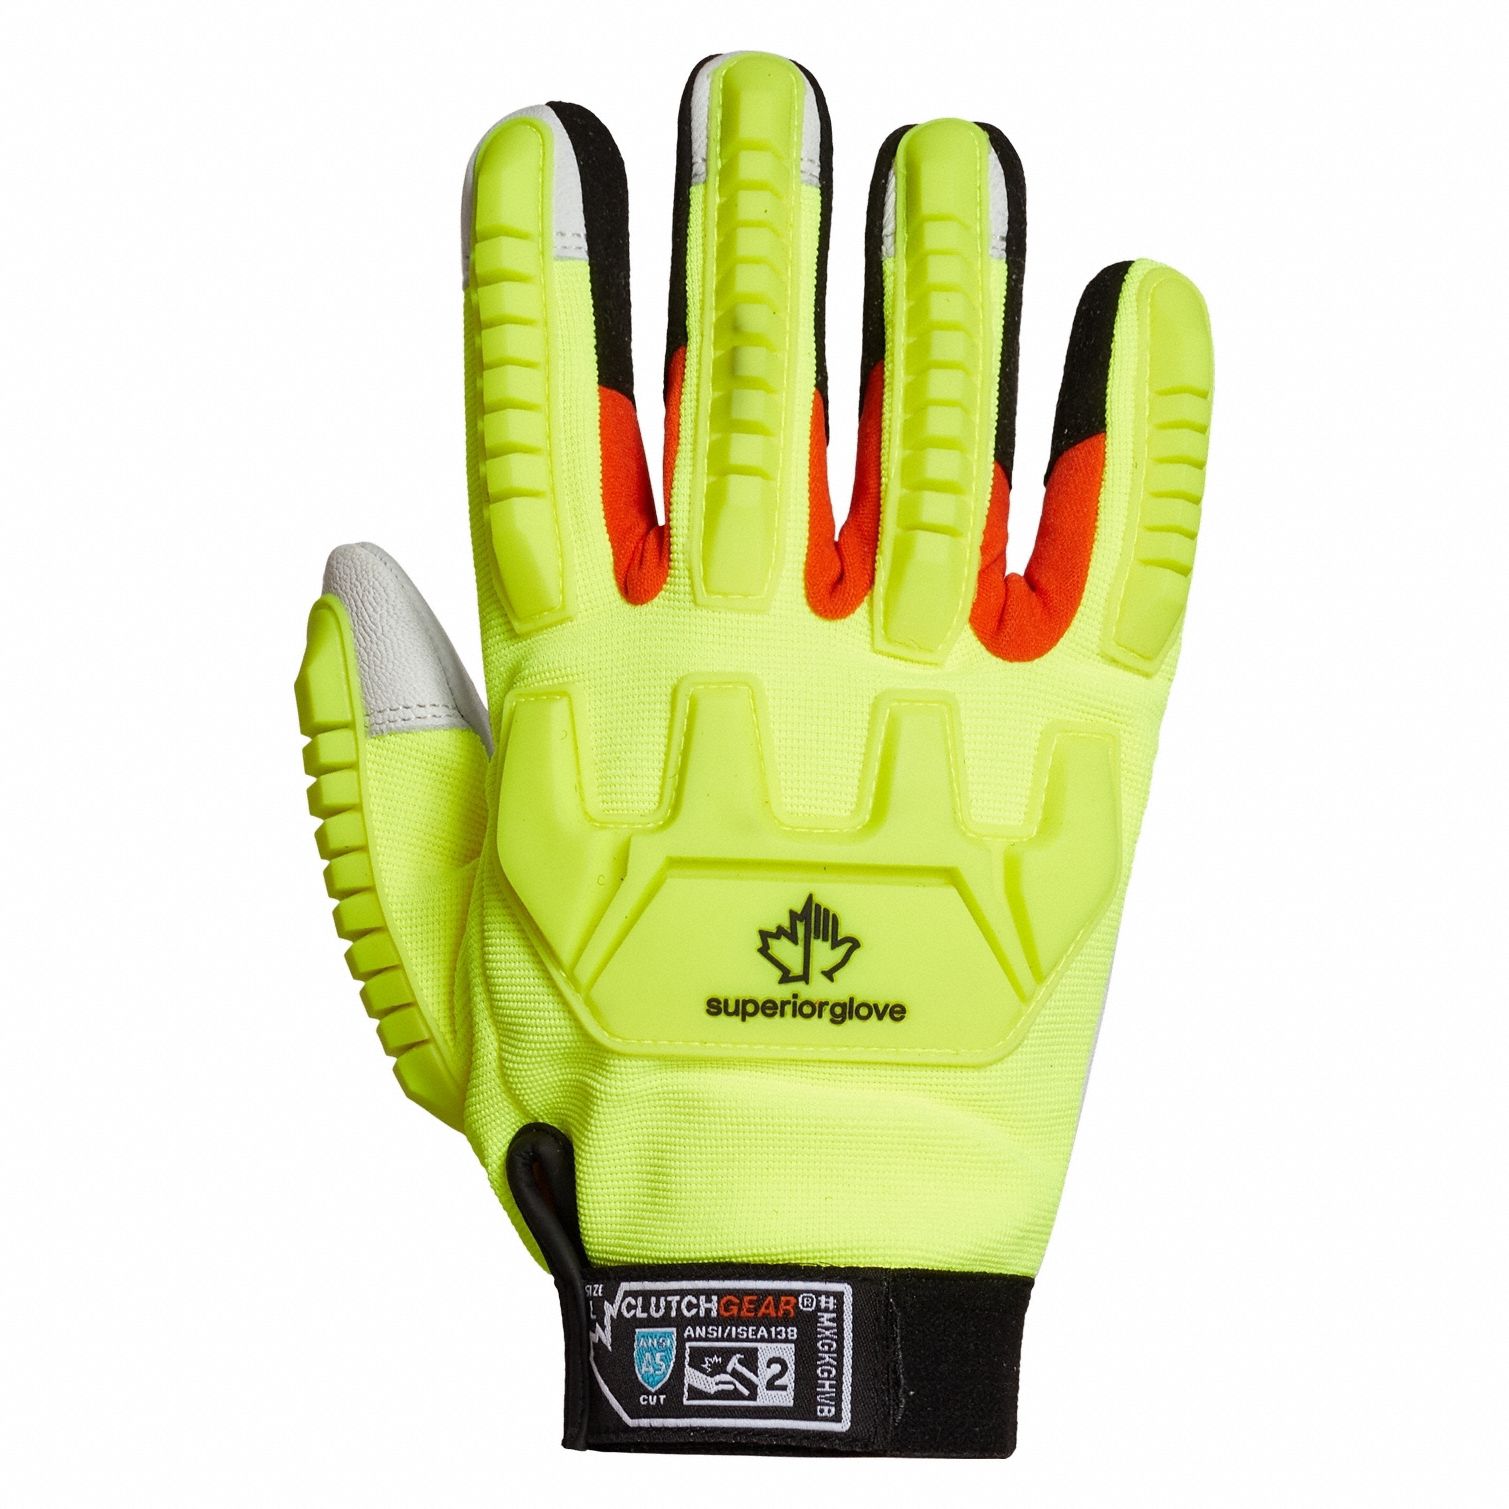 CLUTCH GEAR Mechanics Gloves: XL ( 10 ), Mechanics Glove, Goat-Grain with  Goat Leather Grip, 1 PR